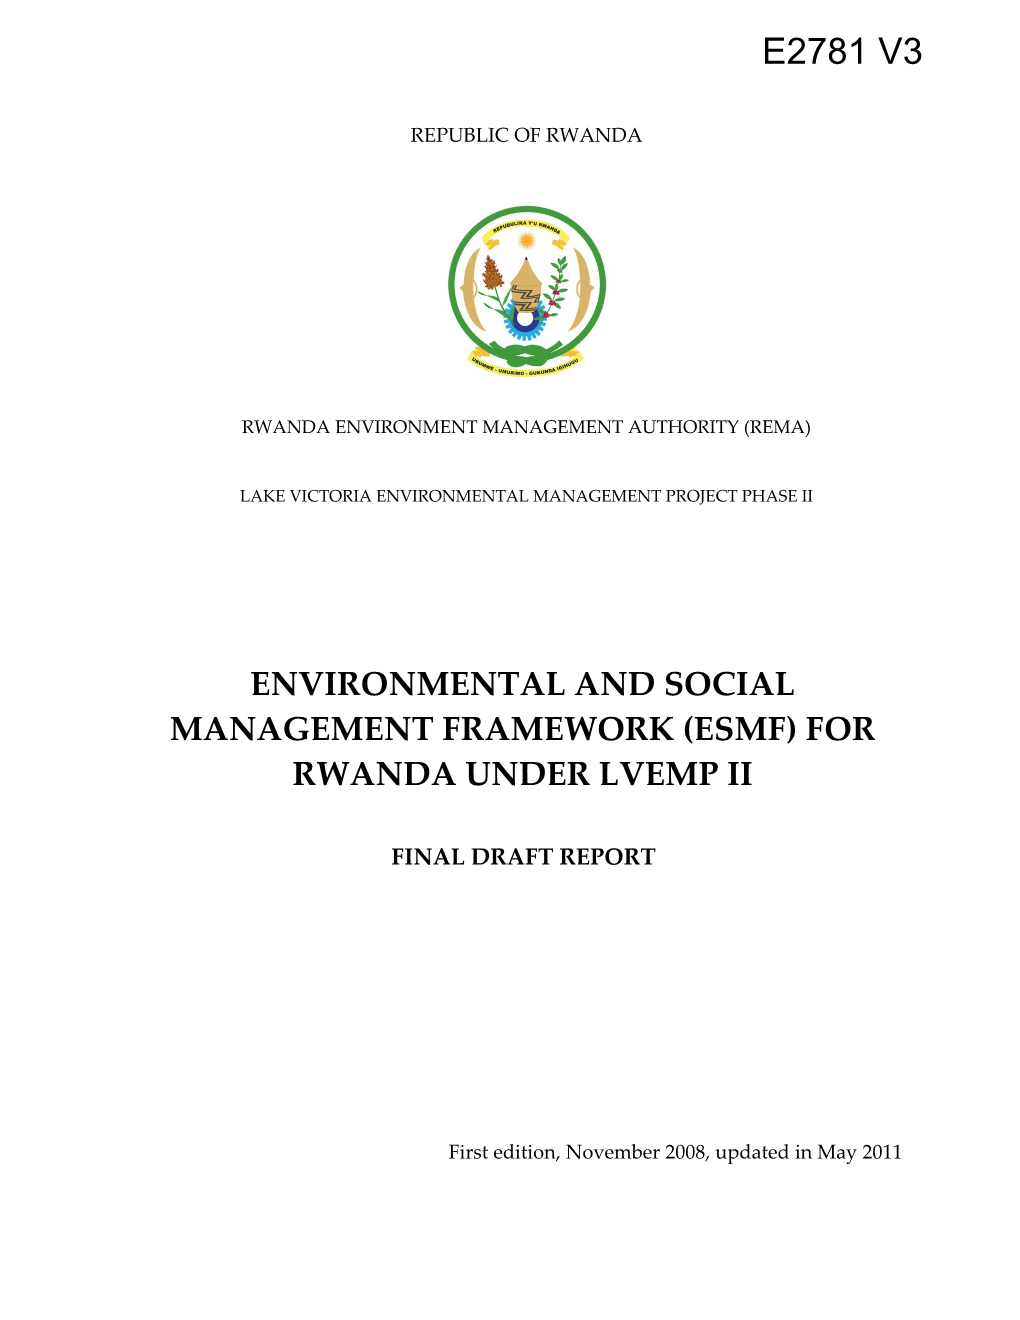 Environmental and Social Management Framework for Rwanda Under Lvemp Ii